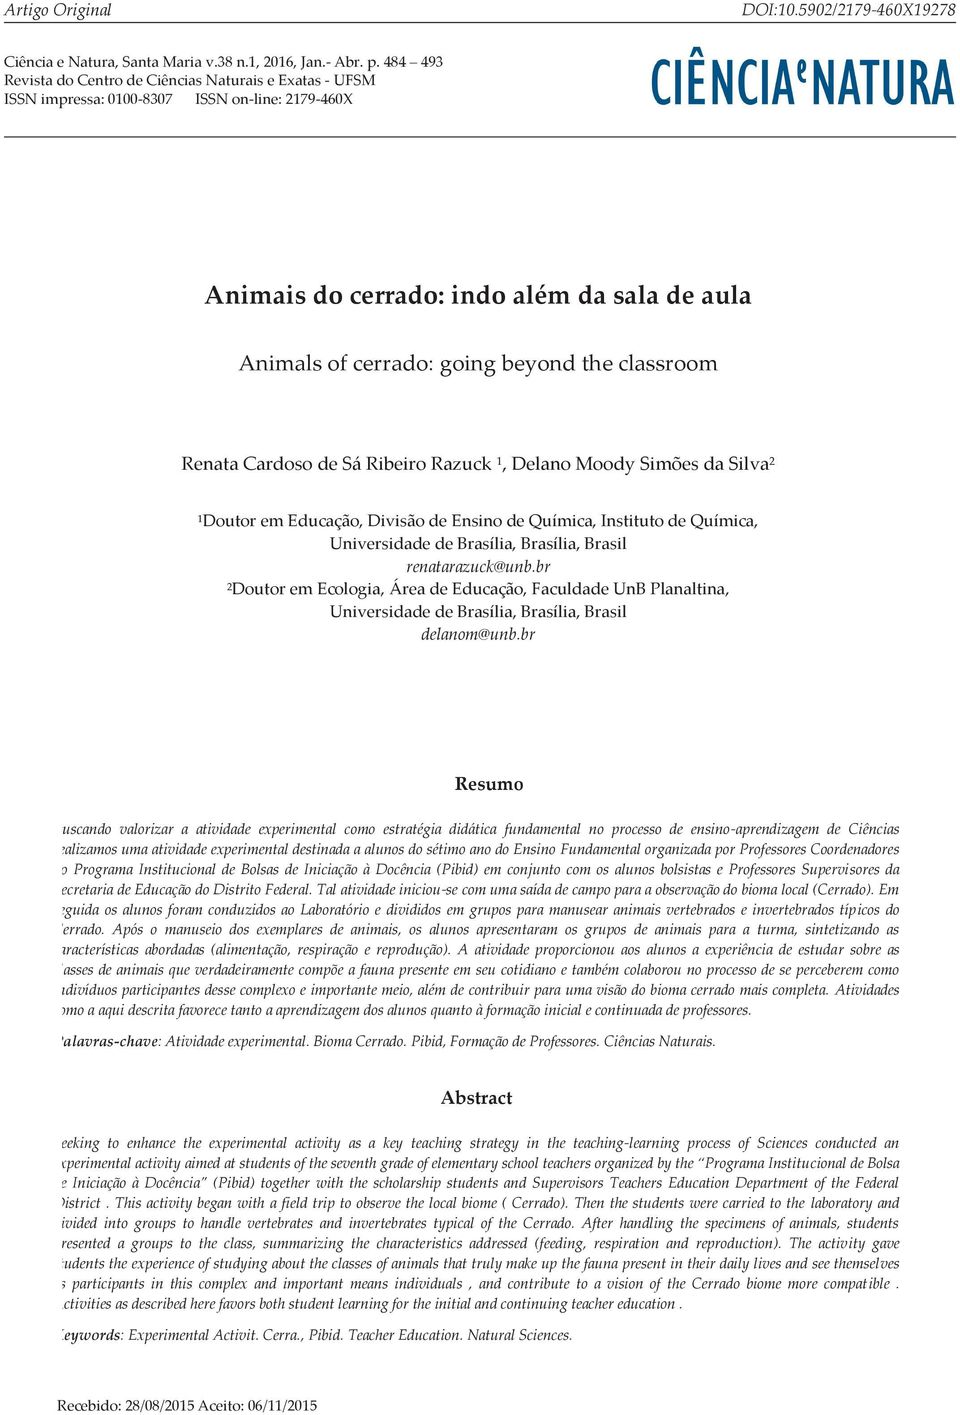 XX XX Rvist do Cntro Ciêncis Nturis Exts UFSM ISSN Ciênci imprss: Ntur, 0100-8307 Snt Mri, ISSN v. on-lin: 36 n. 22179-460X jun. 2014, p.